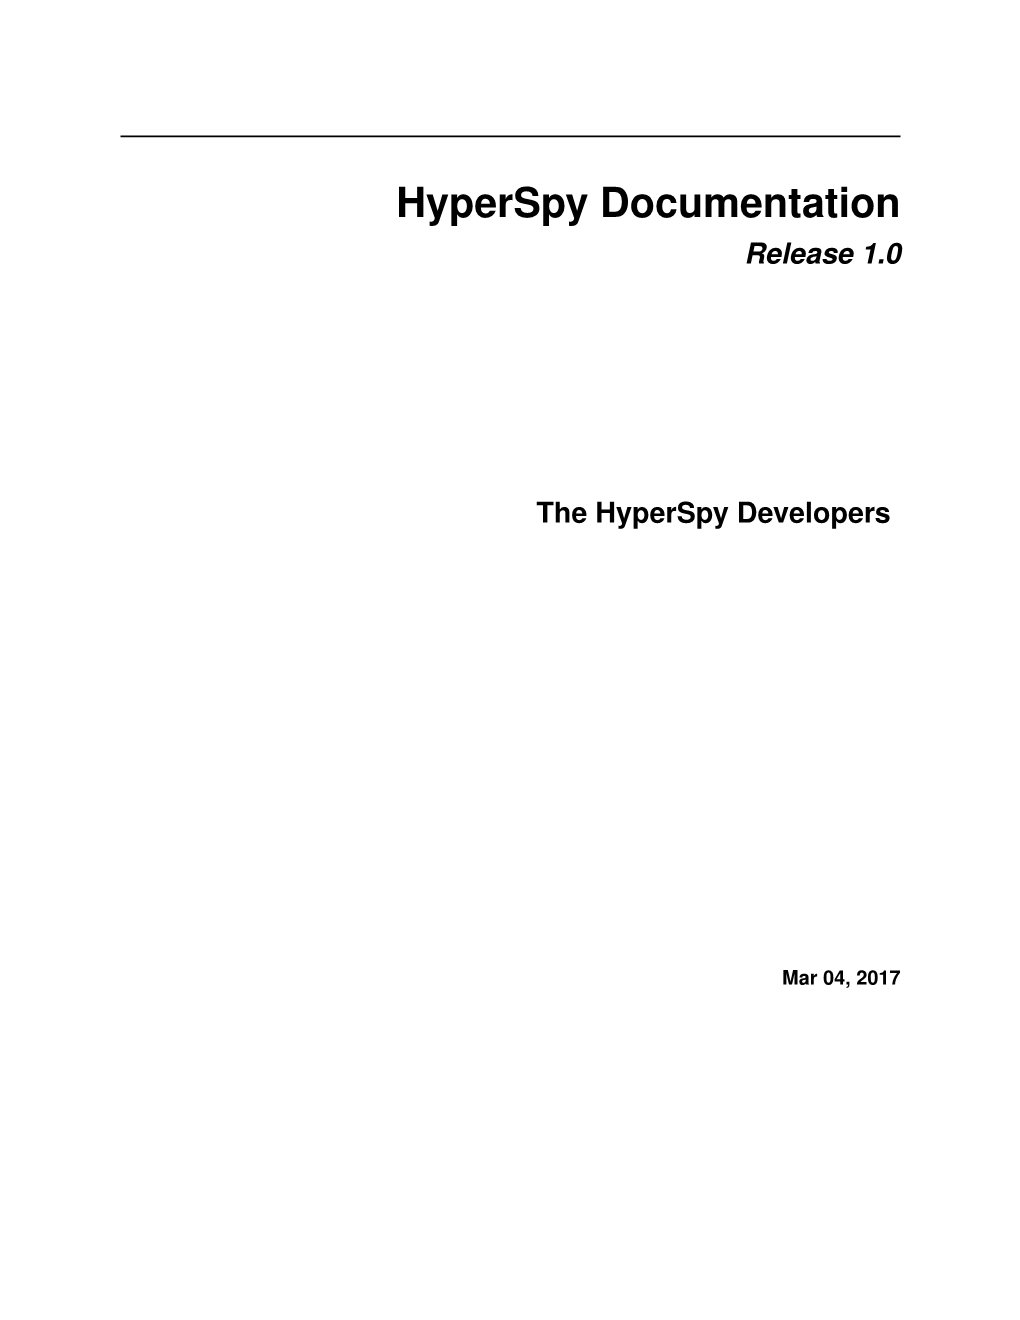 Hyperspy Documentation Release 1.0